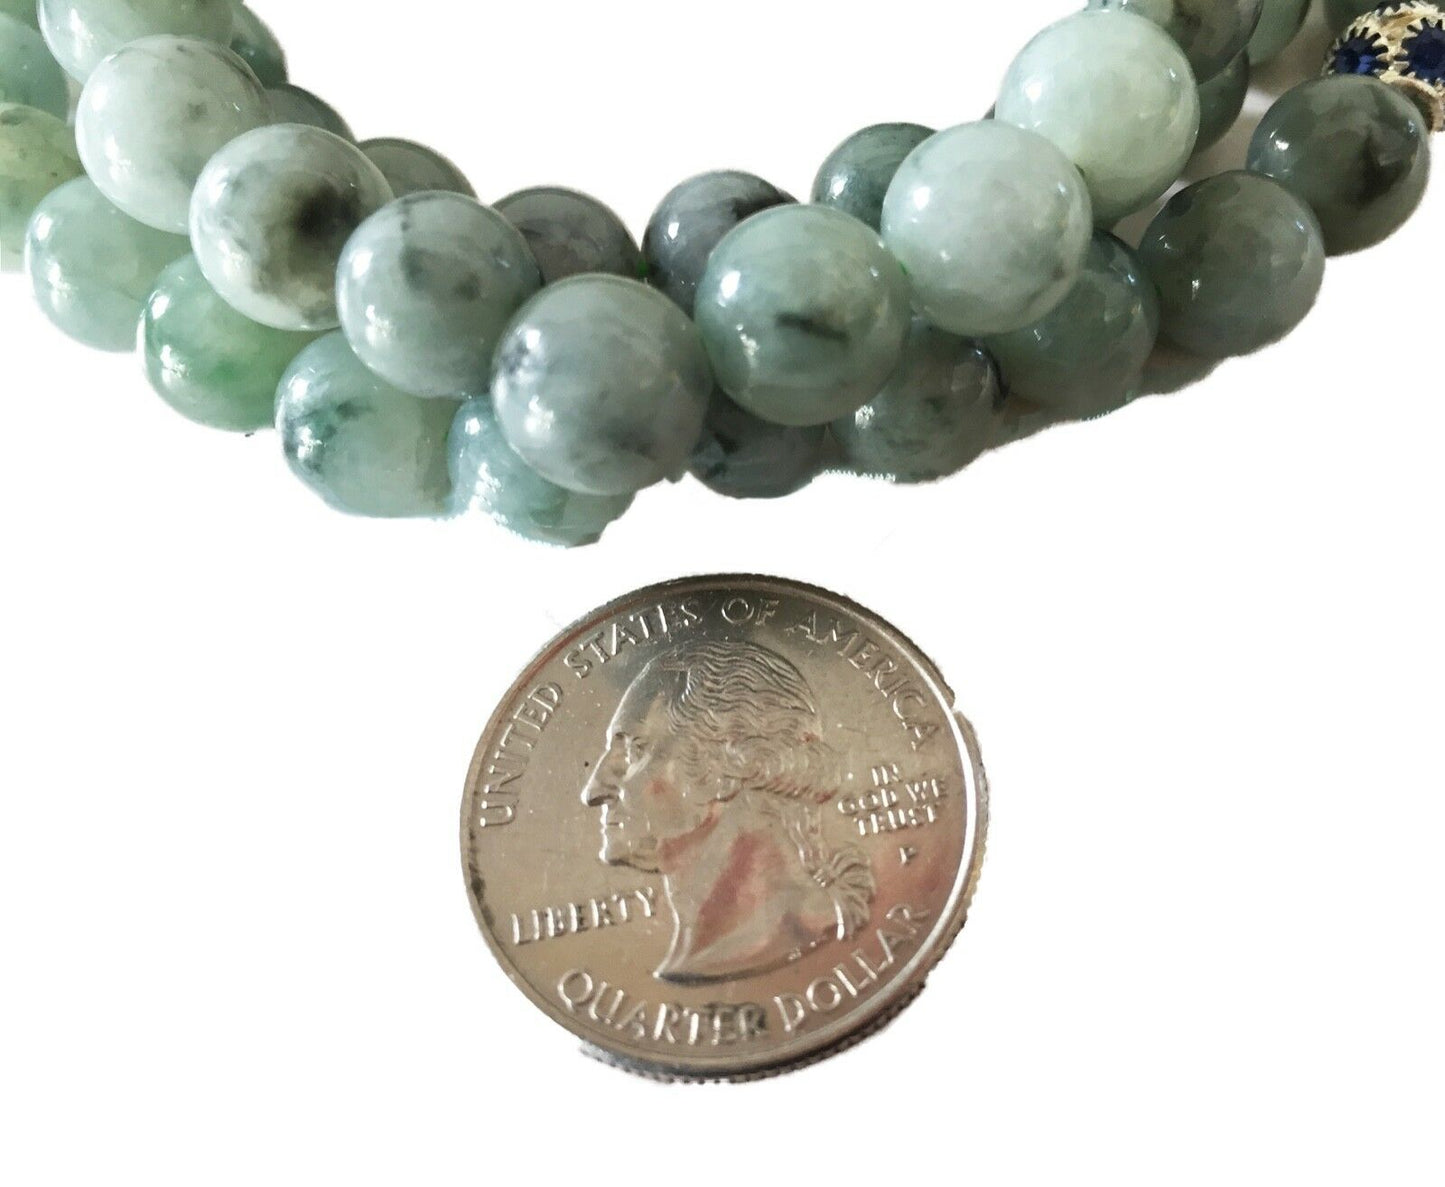 #1704 Superb  Jadeite Jade  Necklace 68 beads